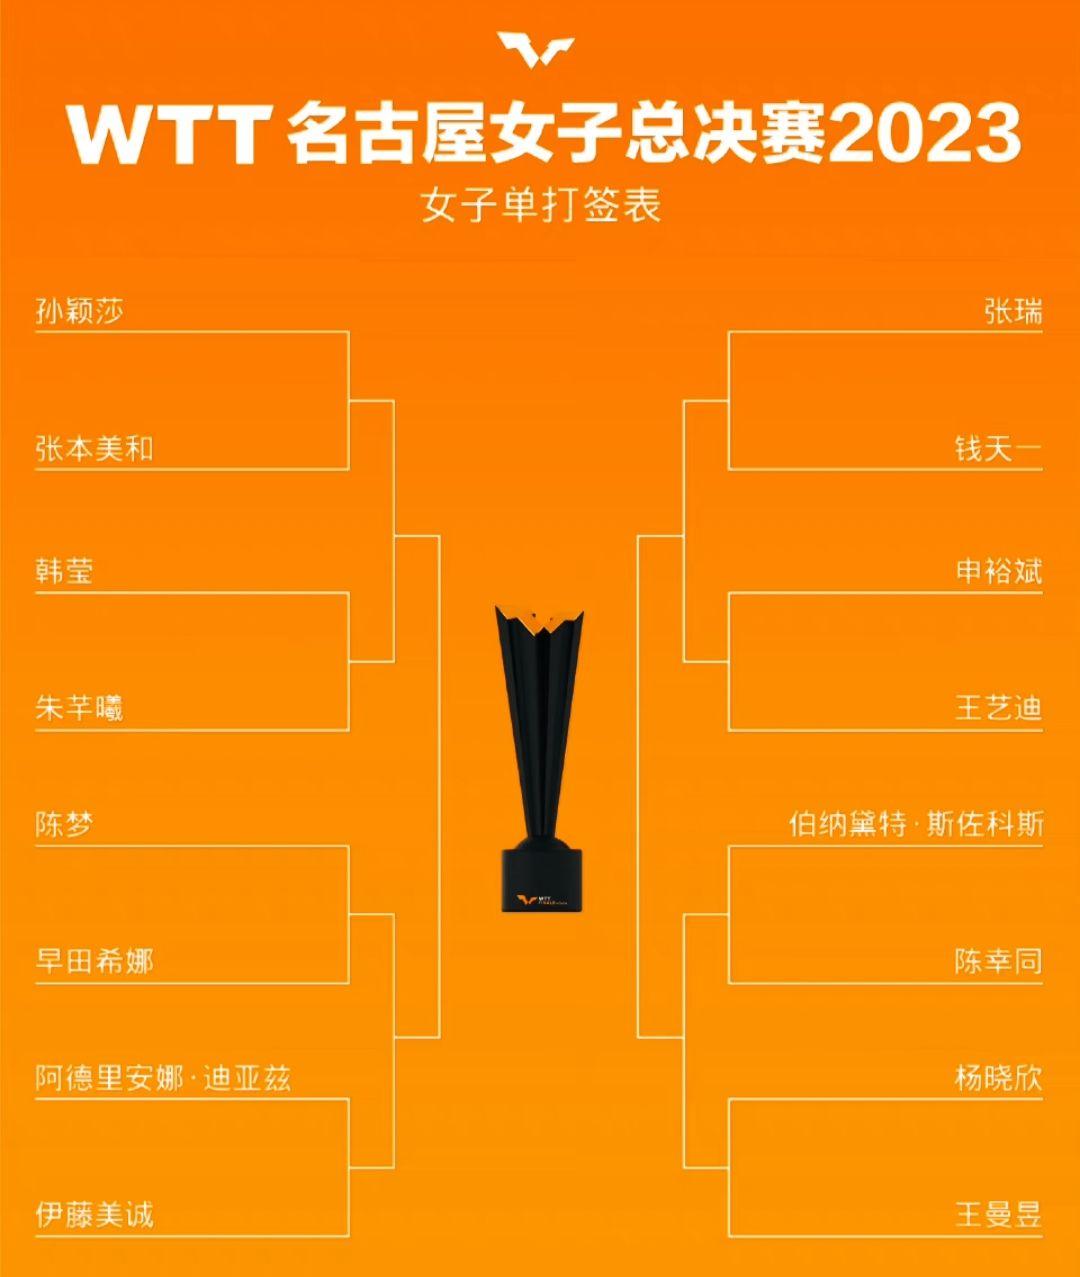 WTT名古屋女子总决赛女双1/4决赛……|WTT|女双|瑞典_新浪新闻